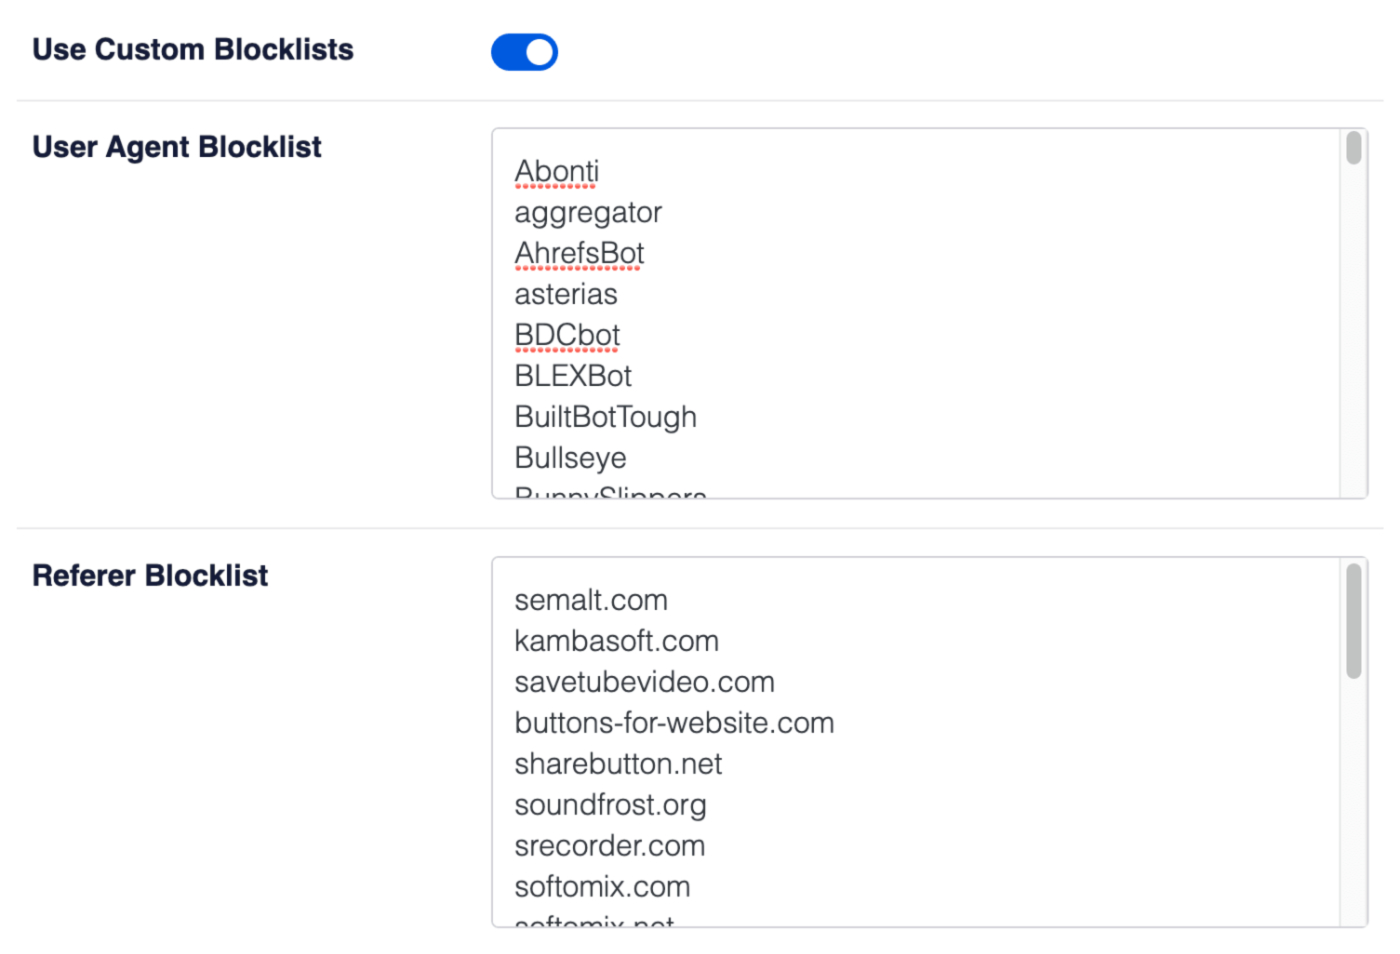 Use Custom Blocklist toggle displays the Blocklist fields